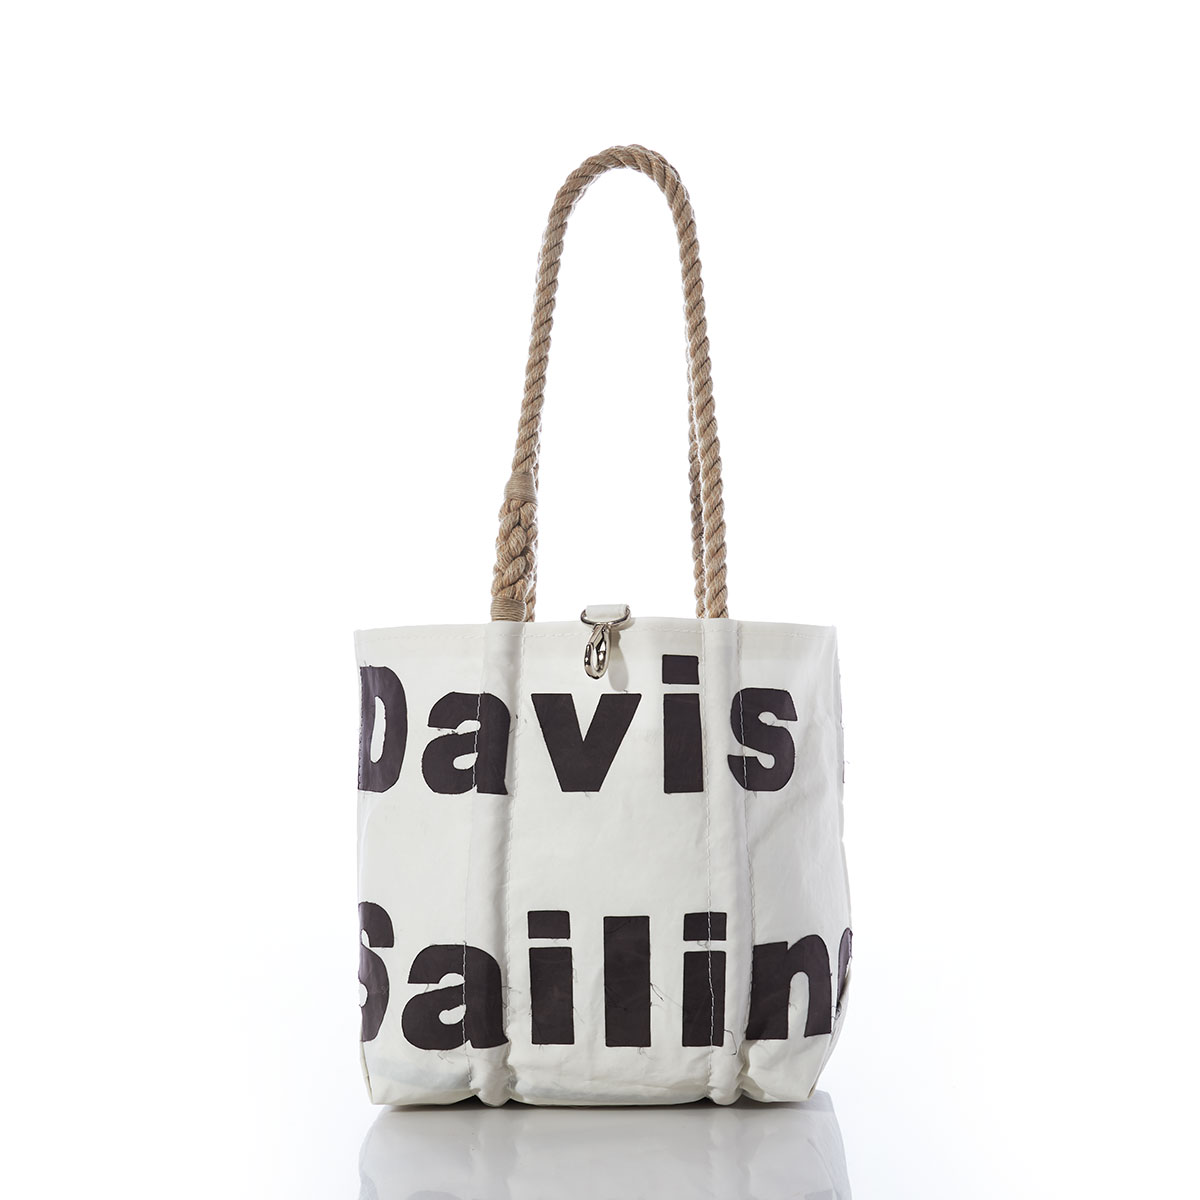 Vintage Davis Sailing Handbag